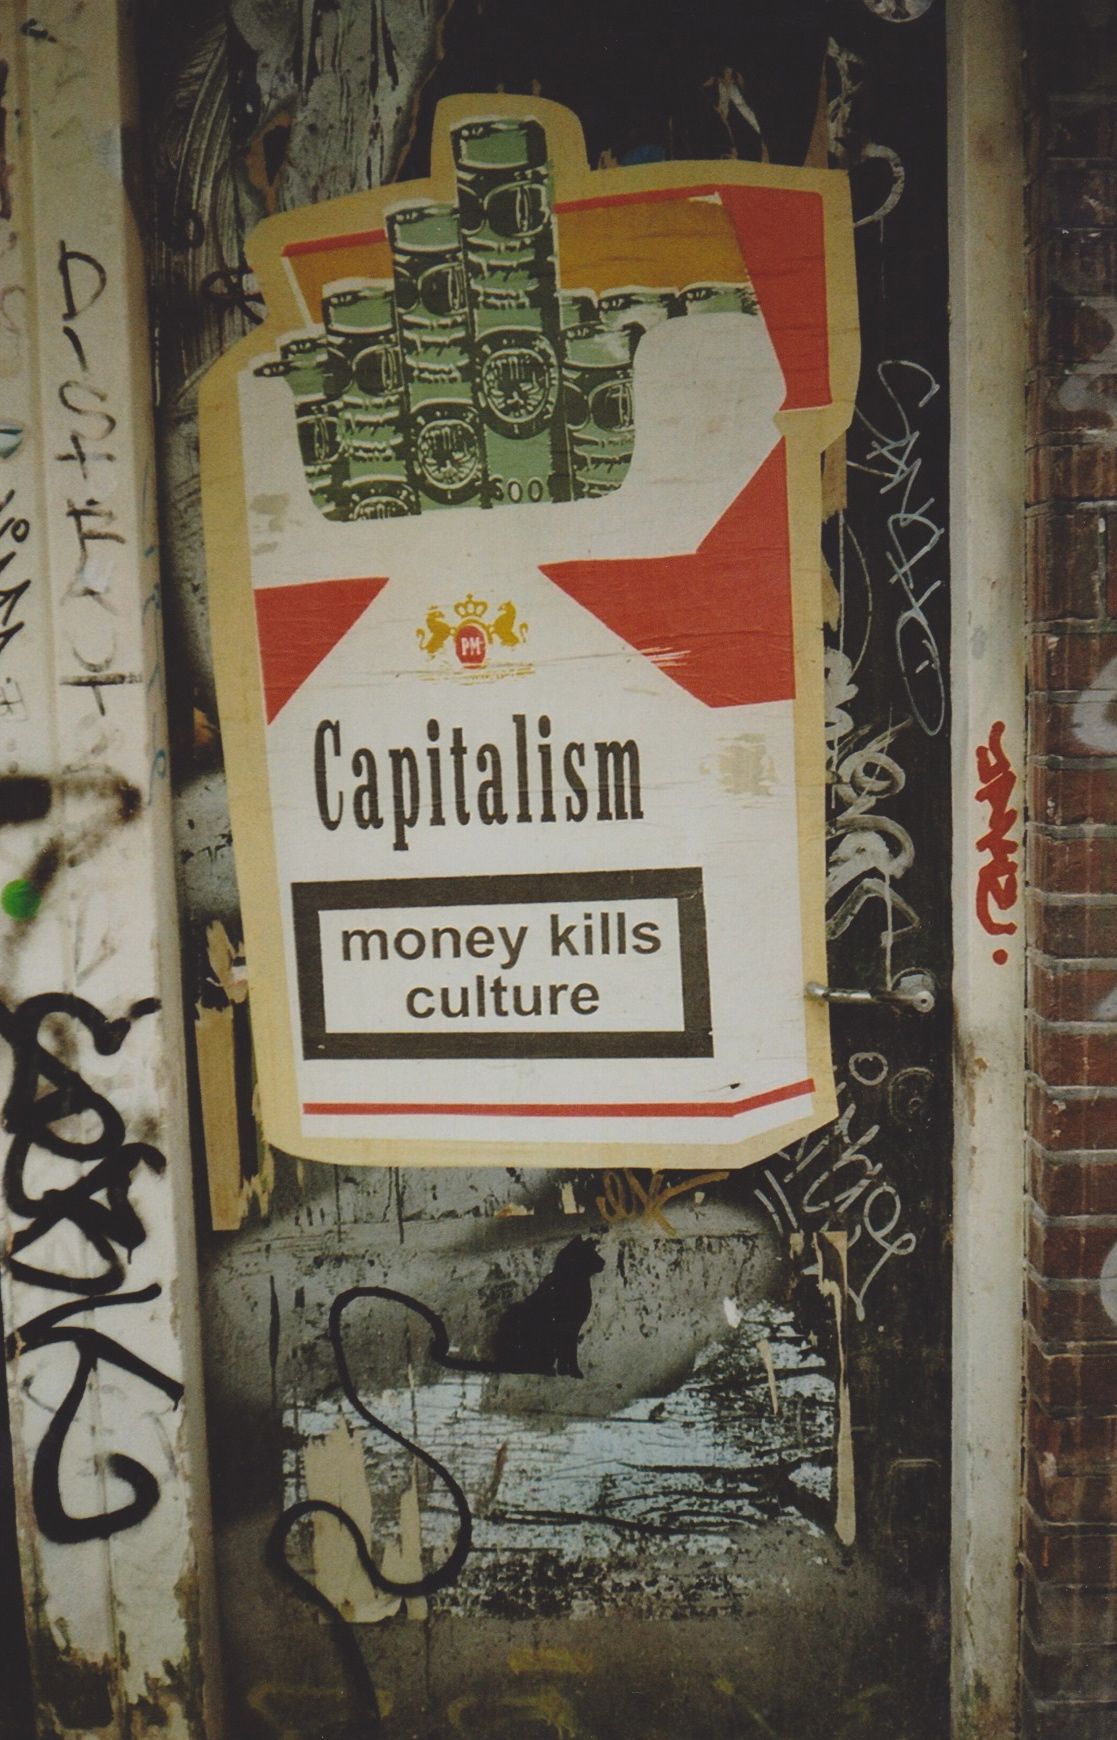 Money kills culture, graffiti by unknown artist